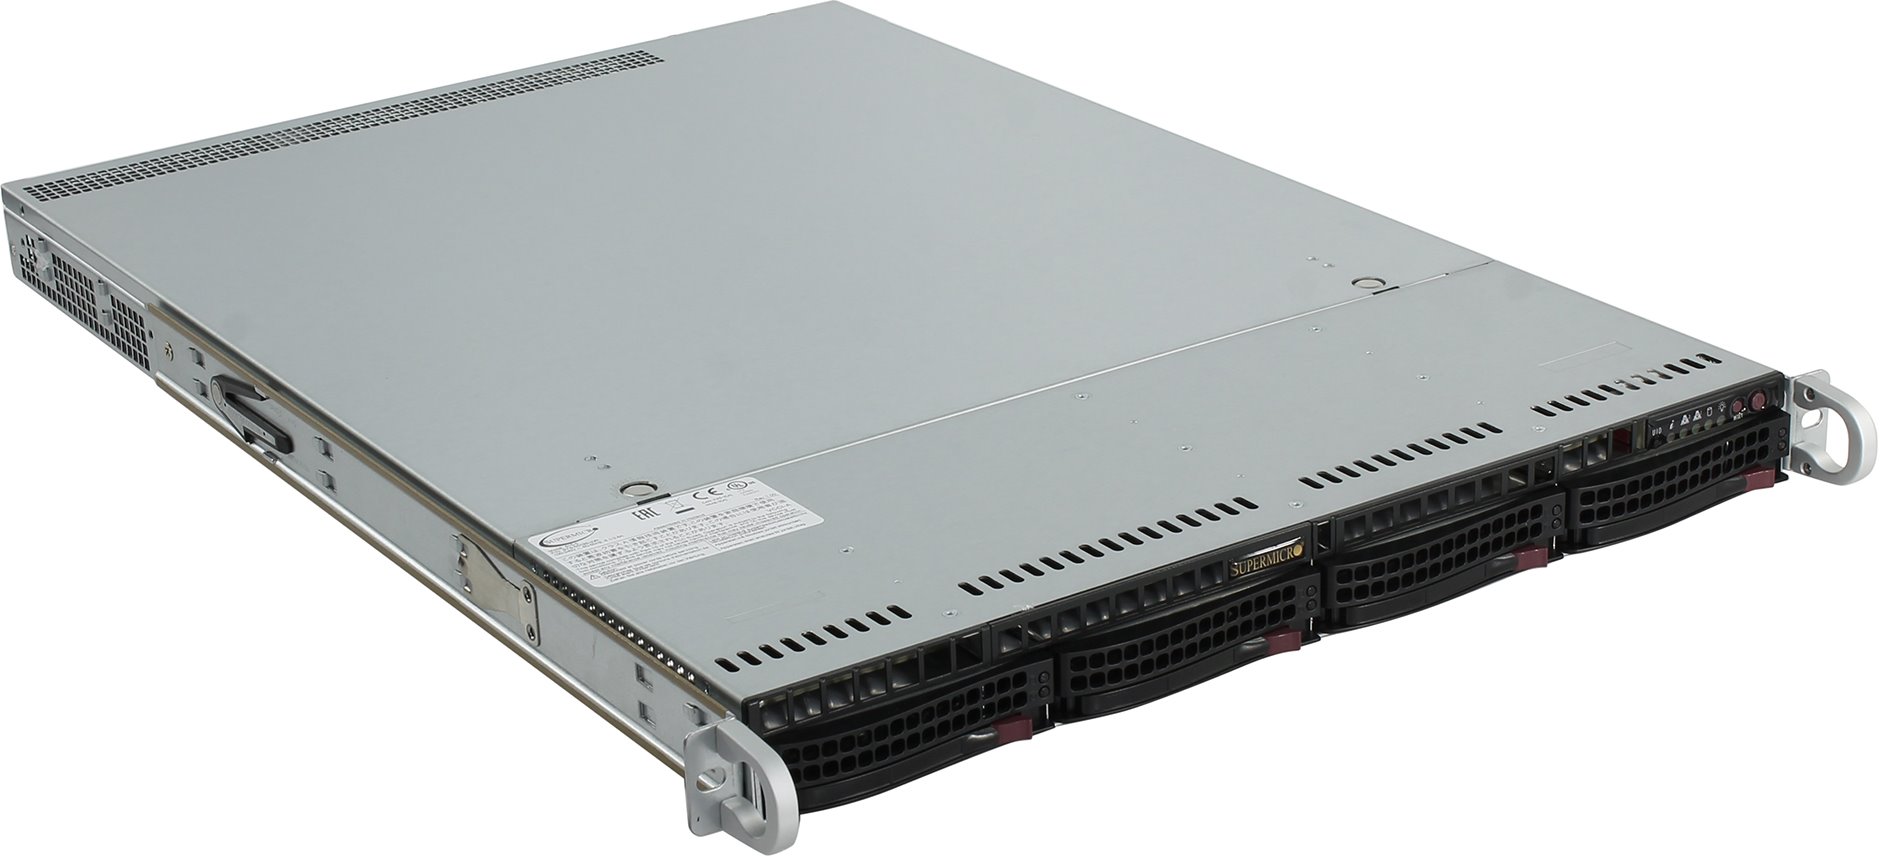 Платформа Supermicro SuperServer 1U 5019P-MT noCPU(1)Scalable/TDP 70-205W/ no DIMM(8)/ SATARAID HDD(4)LFF/ 2x10GbE/ 1xFH, M2/ 1x350W